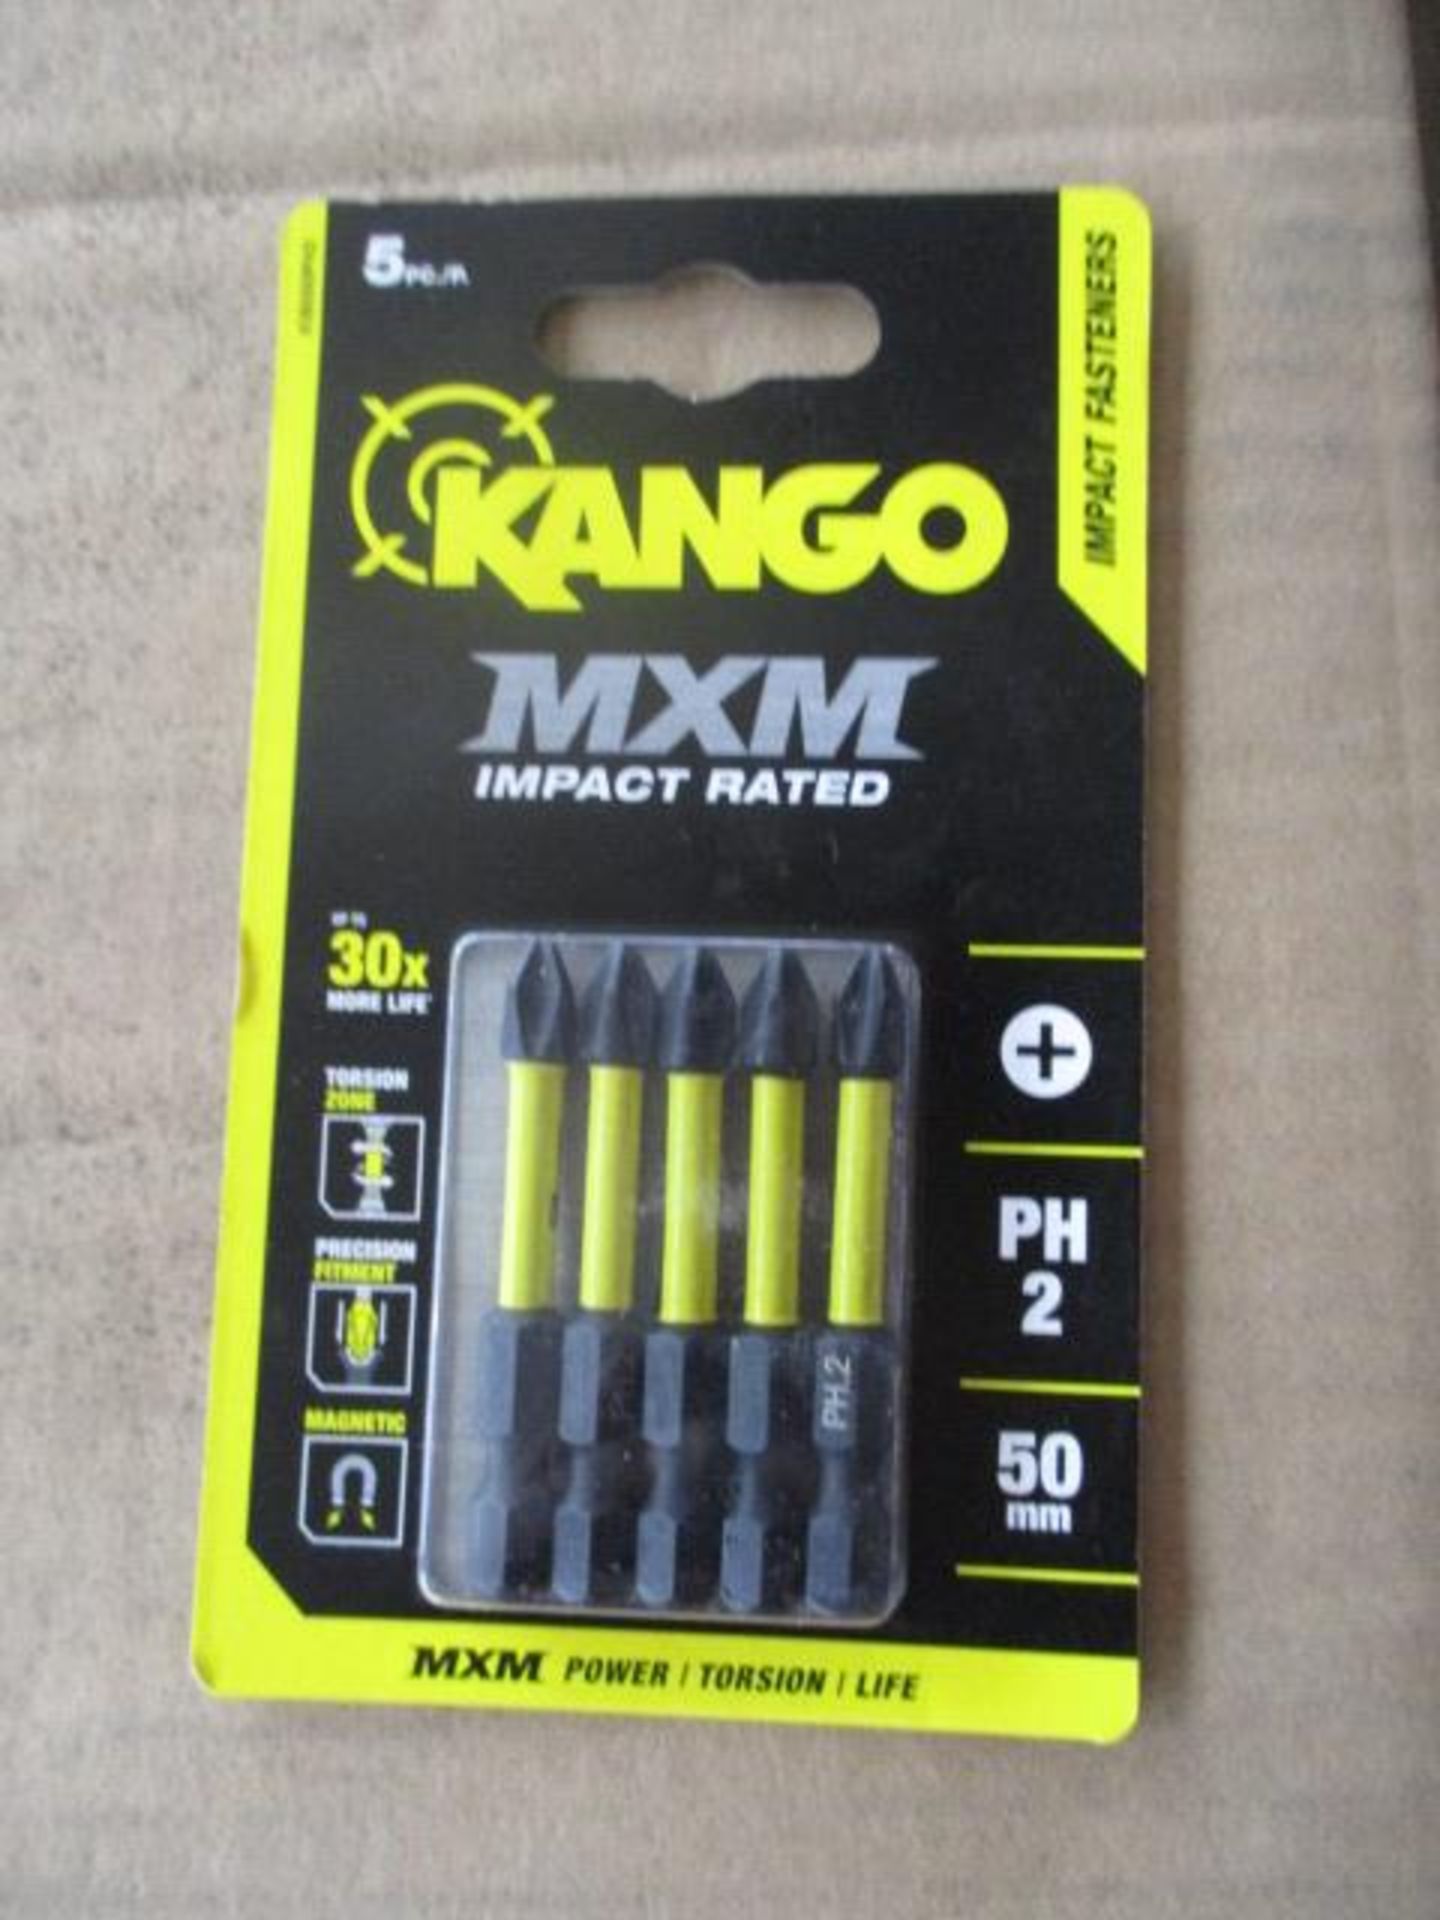 5. cards of Kango MXM impact drill bits